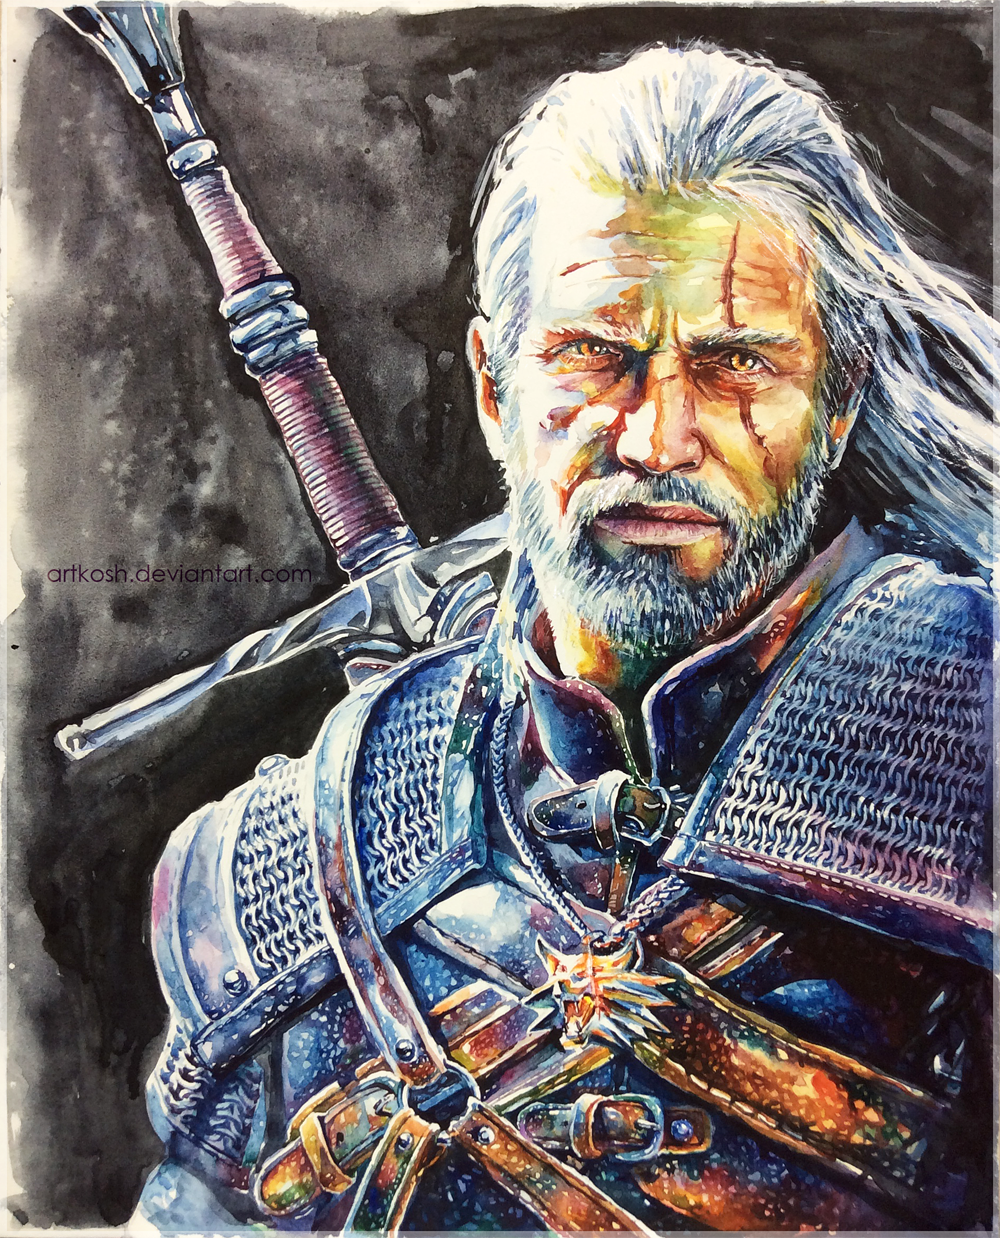 Geralt z Rivii - My, The Witcher 3: Wild Hunt, Witcher, Fan art, Watercolor, Artkosh, The Witcher 3: Wild Hunt, Longpost, Geralt of Rivia, CD Projekt